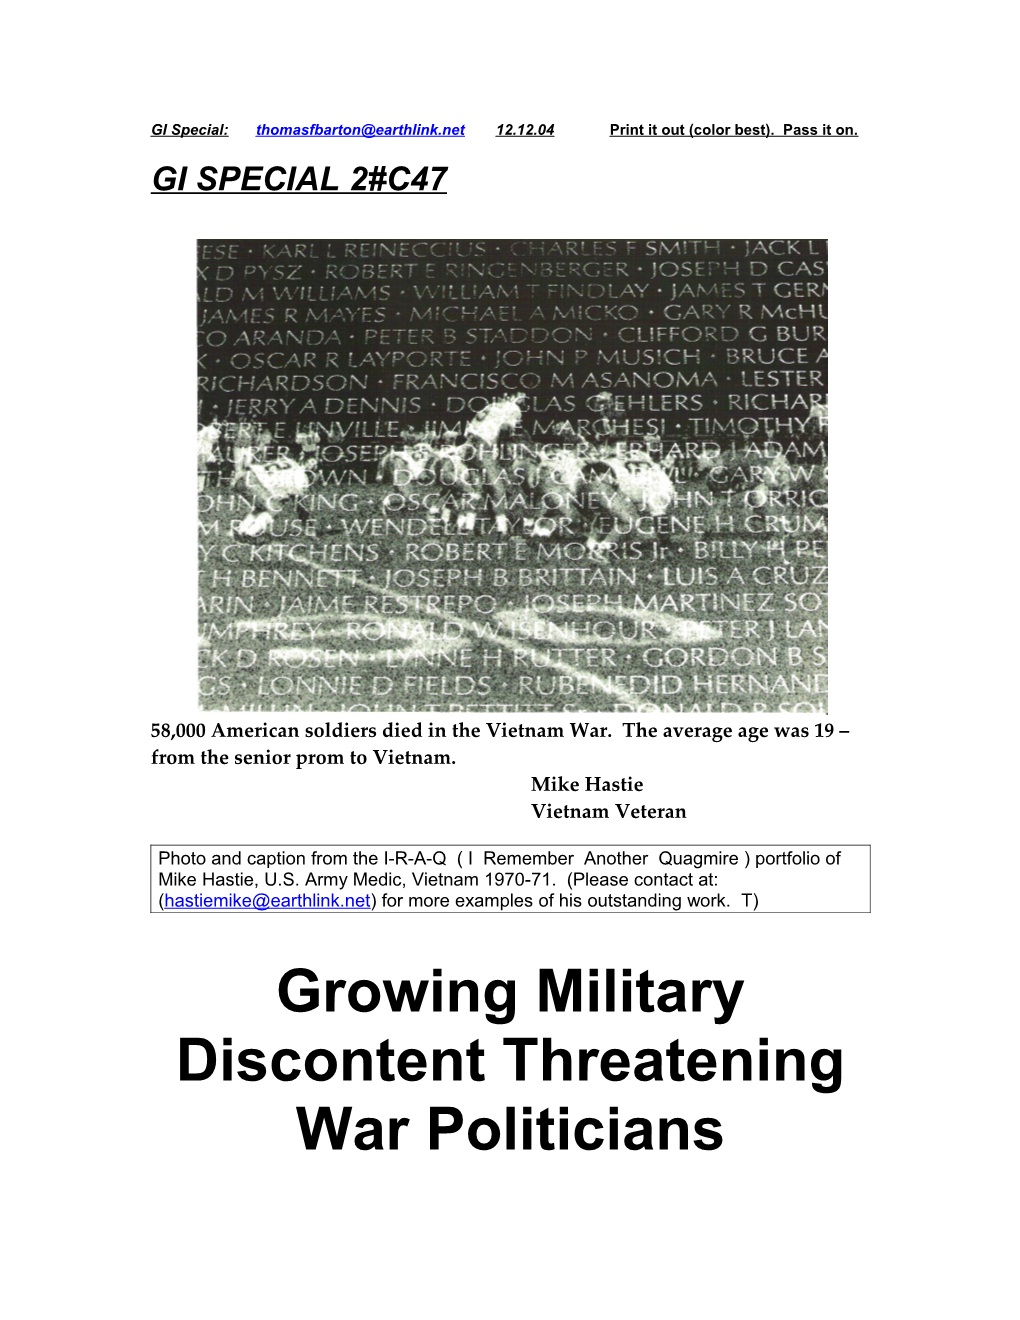 Growing Military Discontent Threatening War Politicians